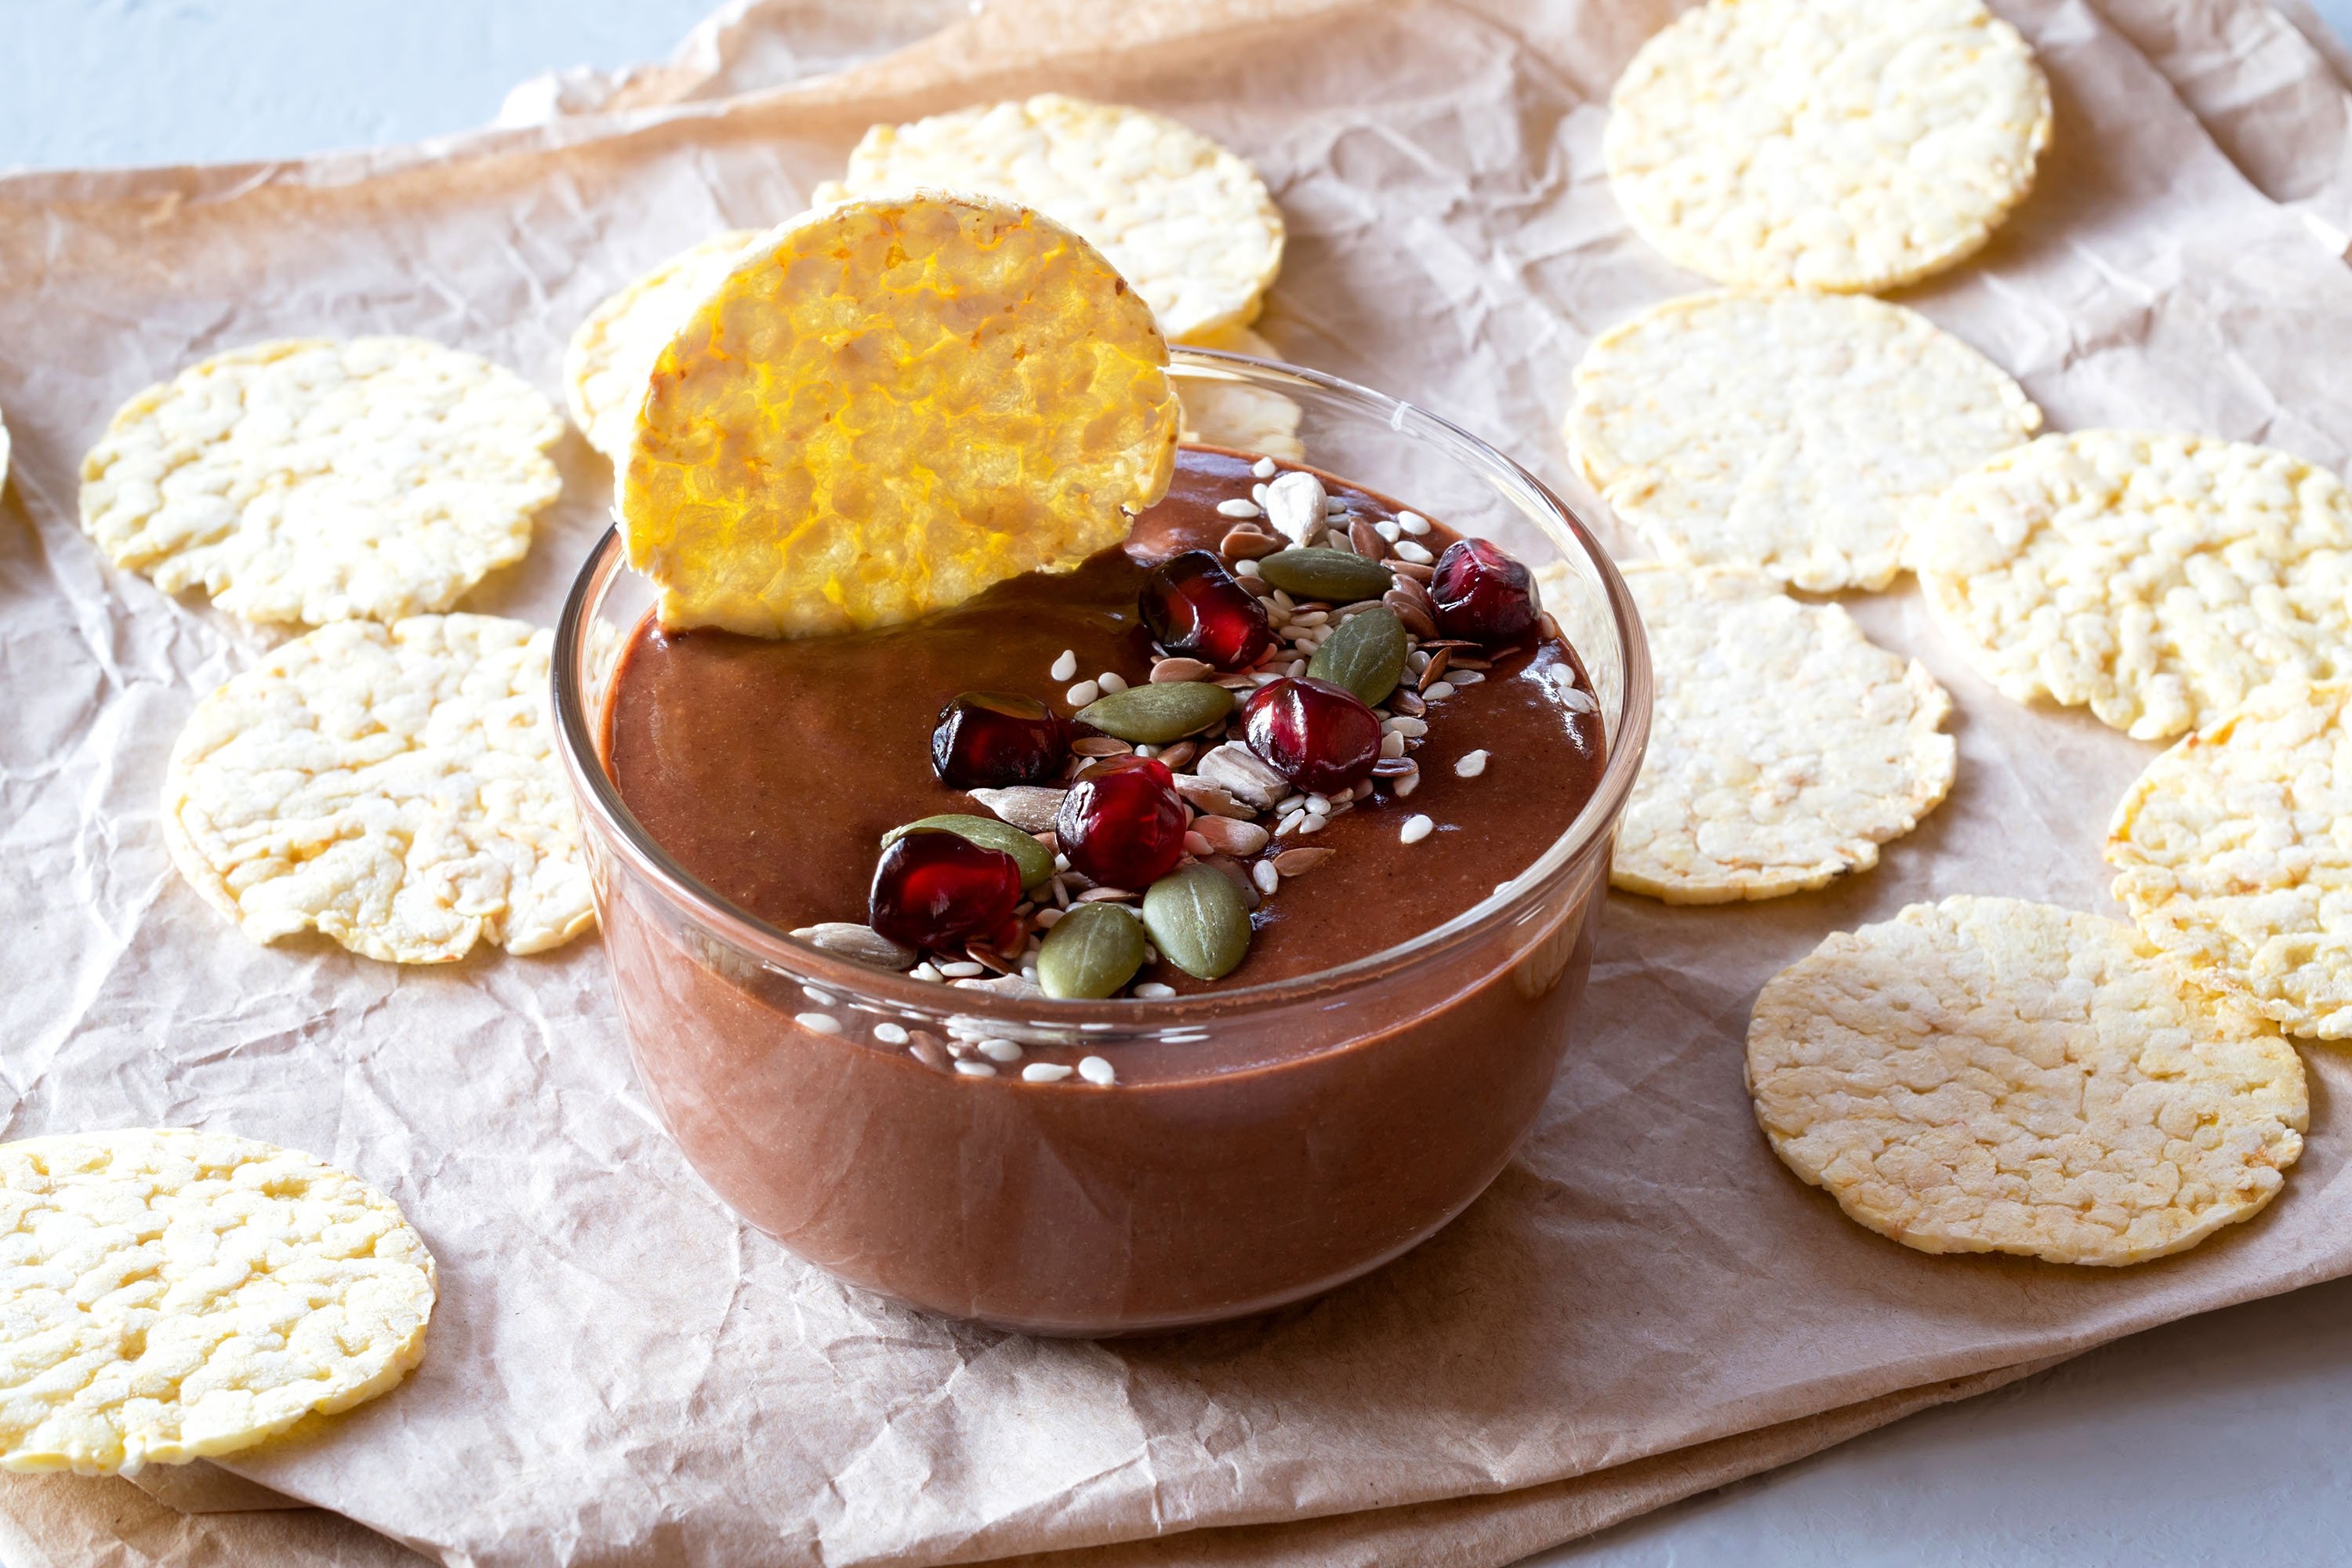 Chocolate hummus with corn chips. (Shutterstock Photo)